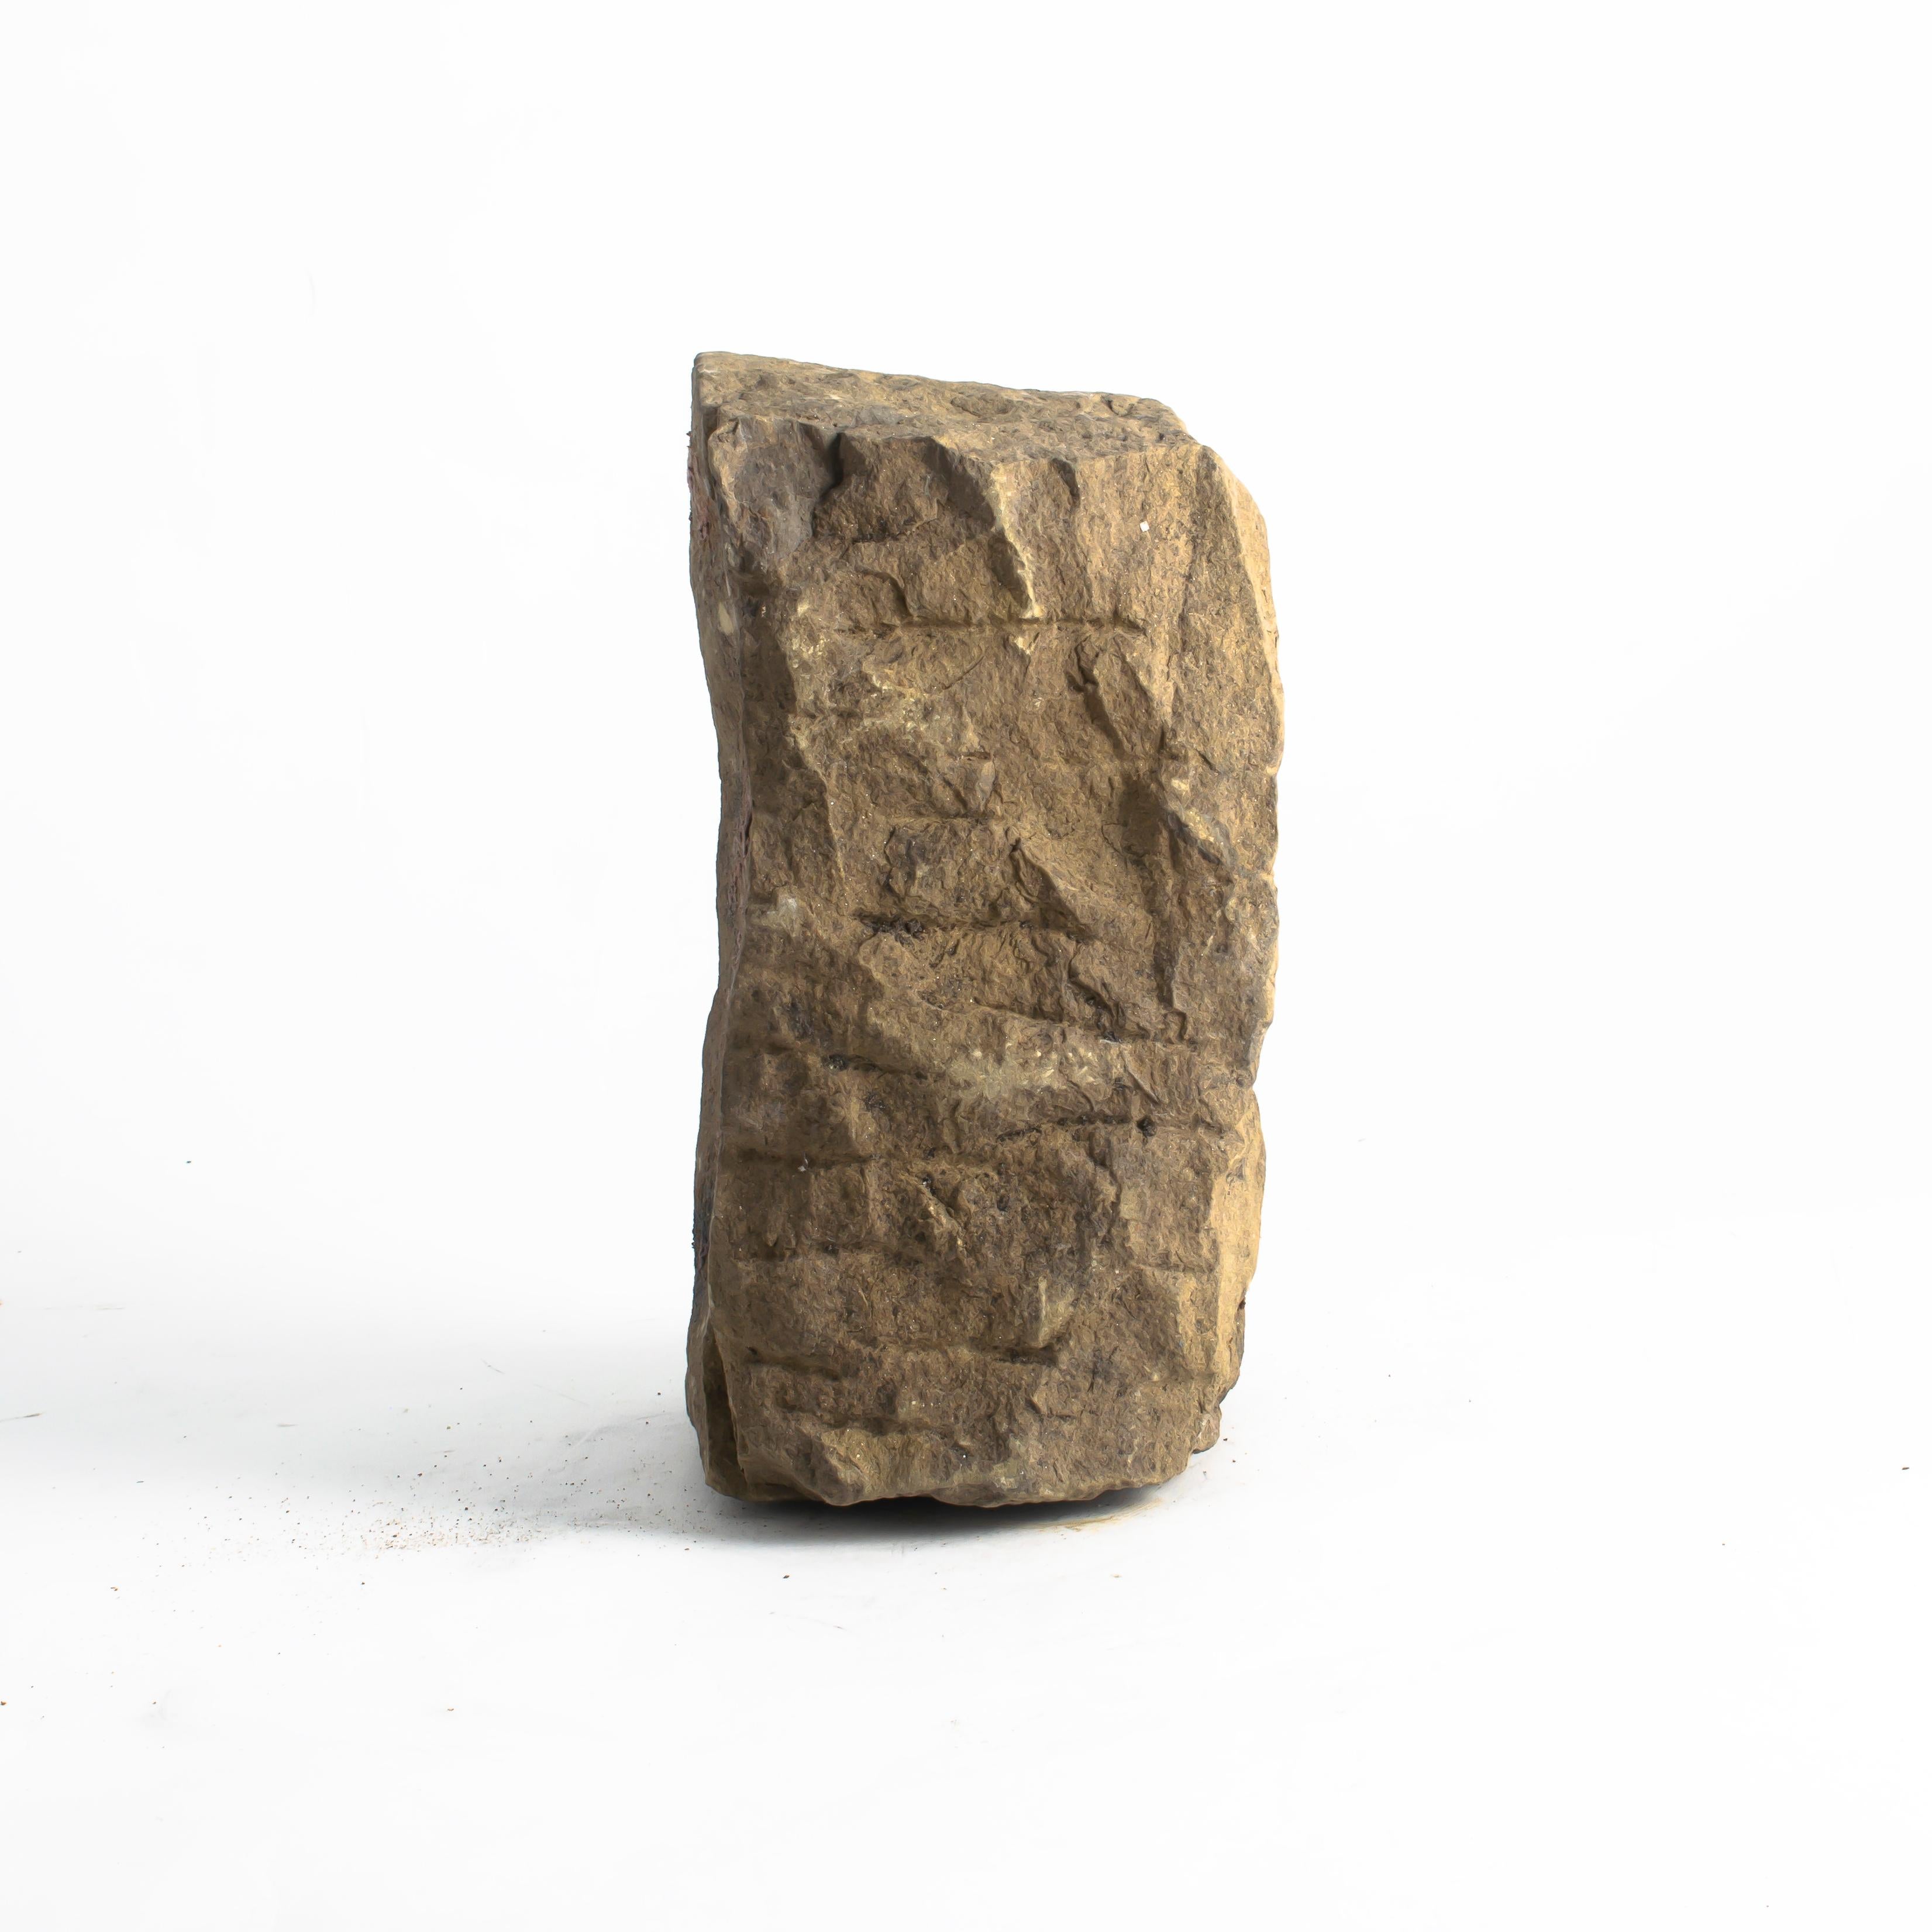 Hand-Carved 400-600 Years Old Sandstone Sculpture Leg Fragment